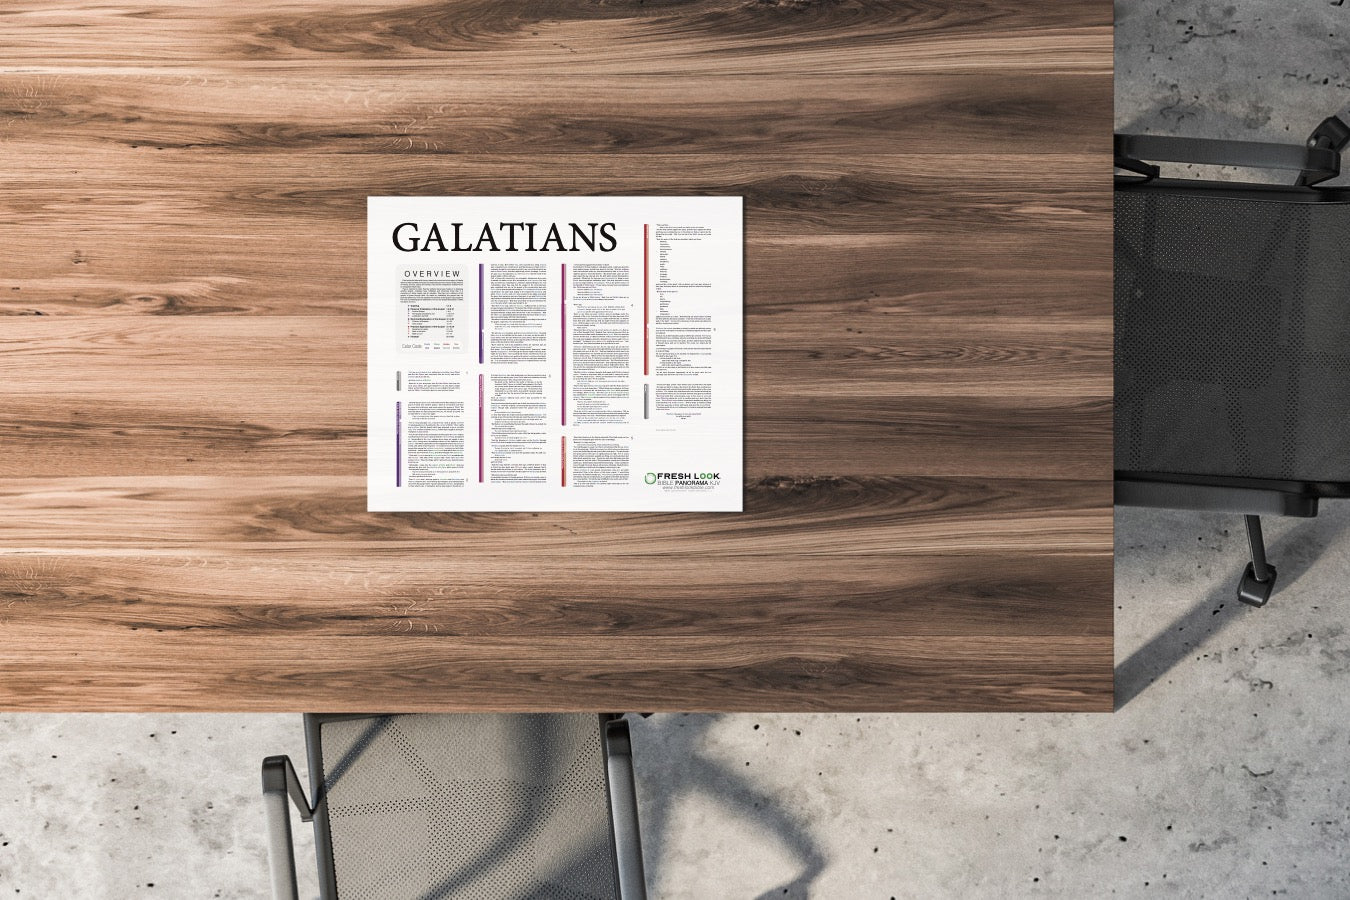 Galatians Panorama Laminated